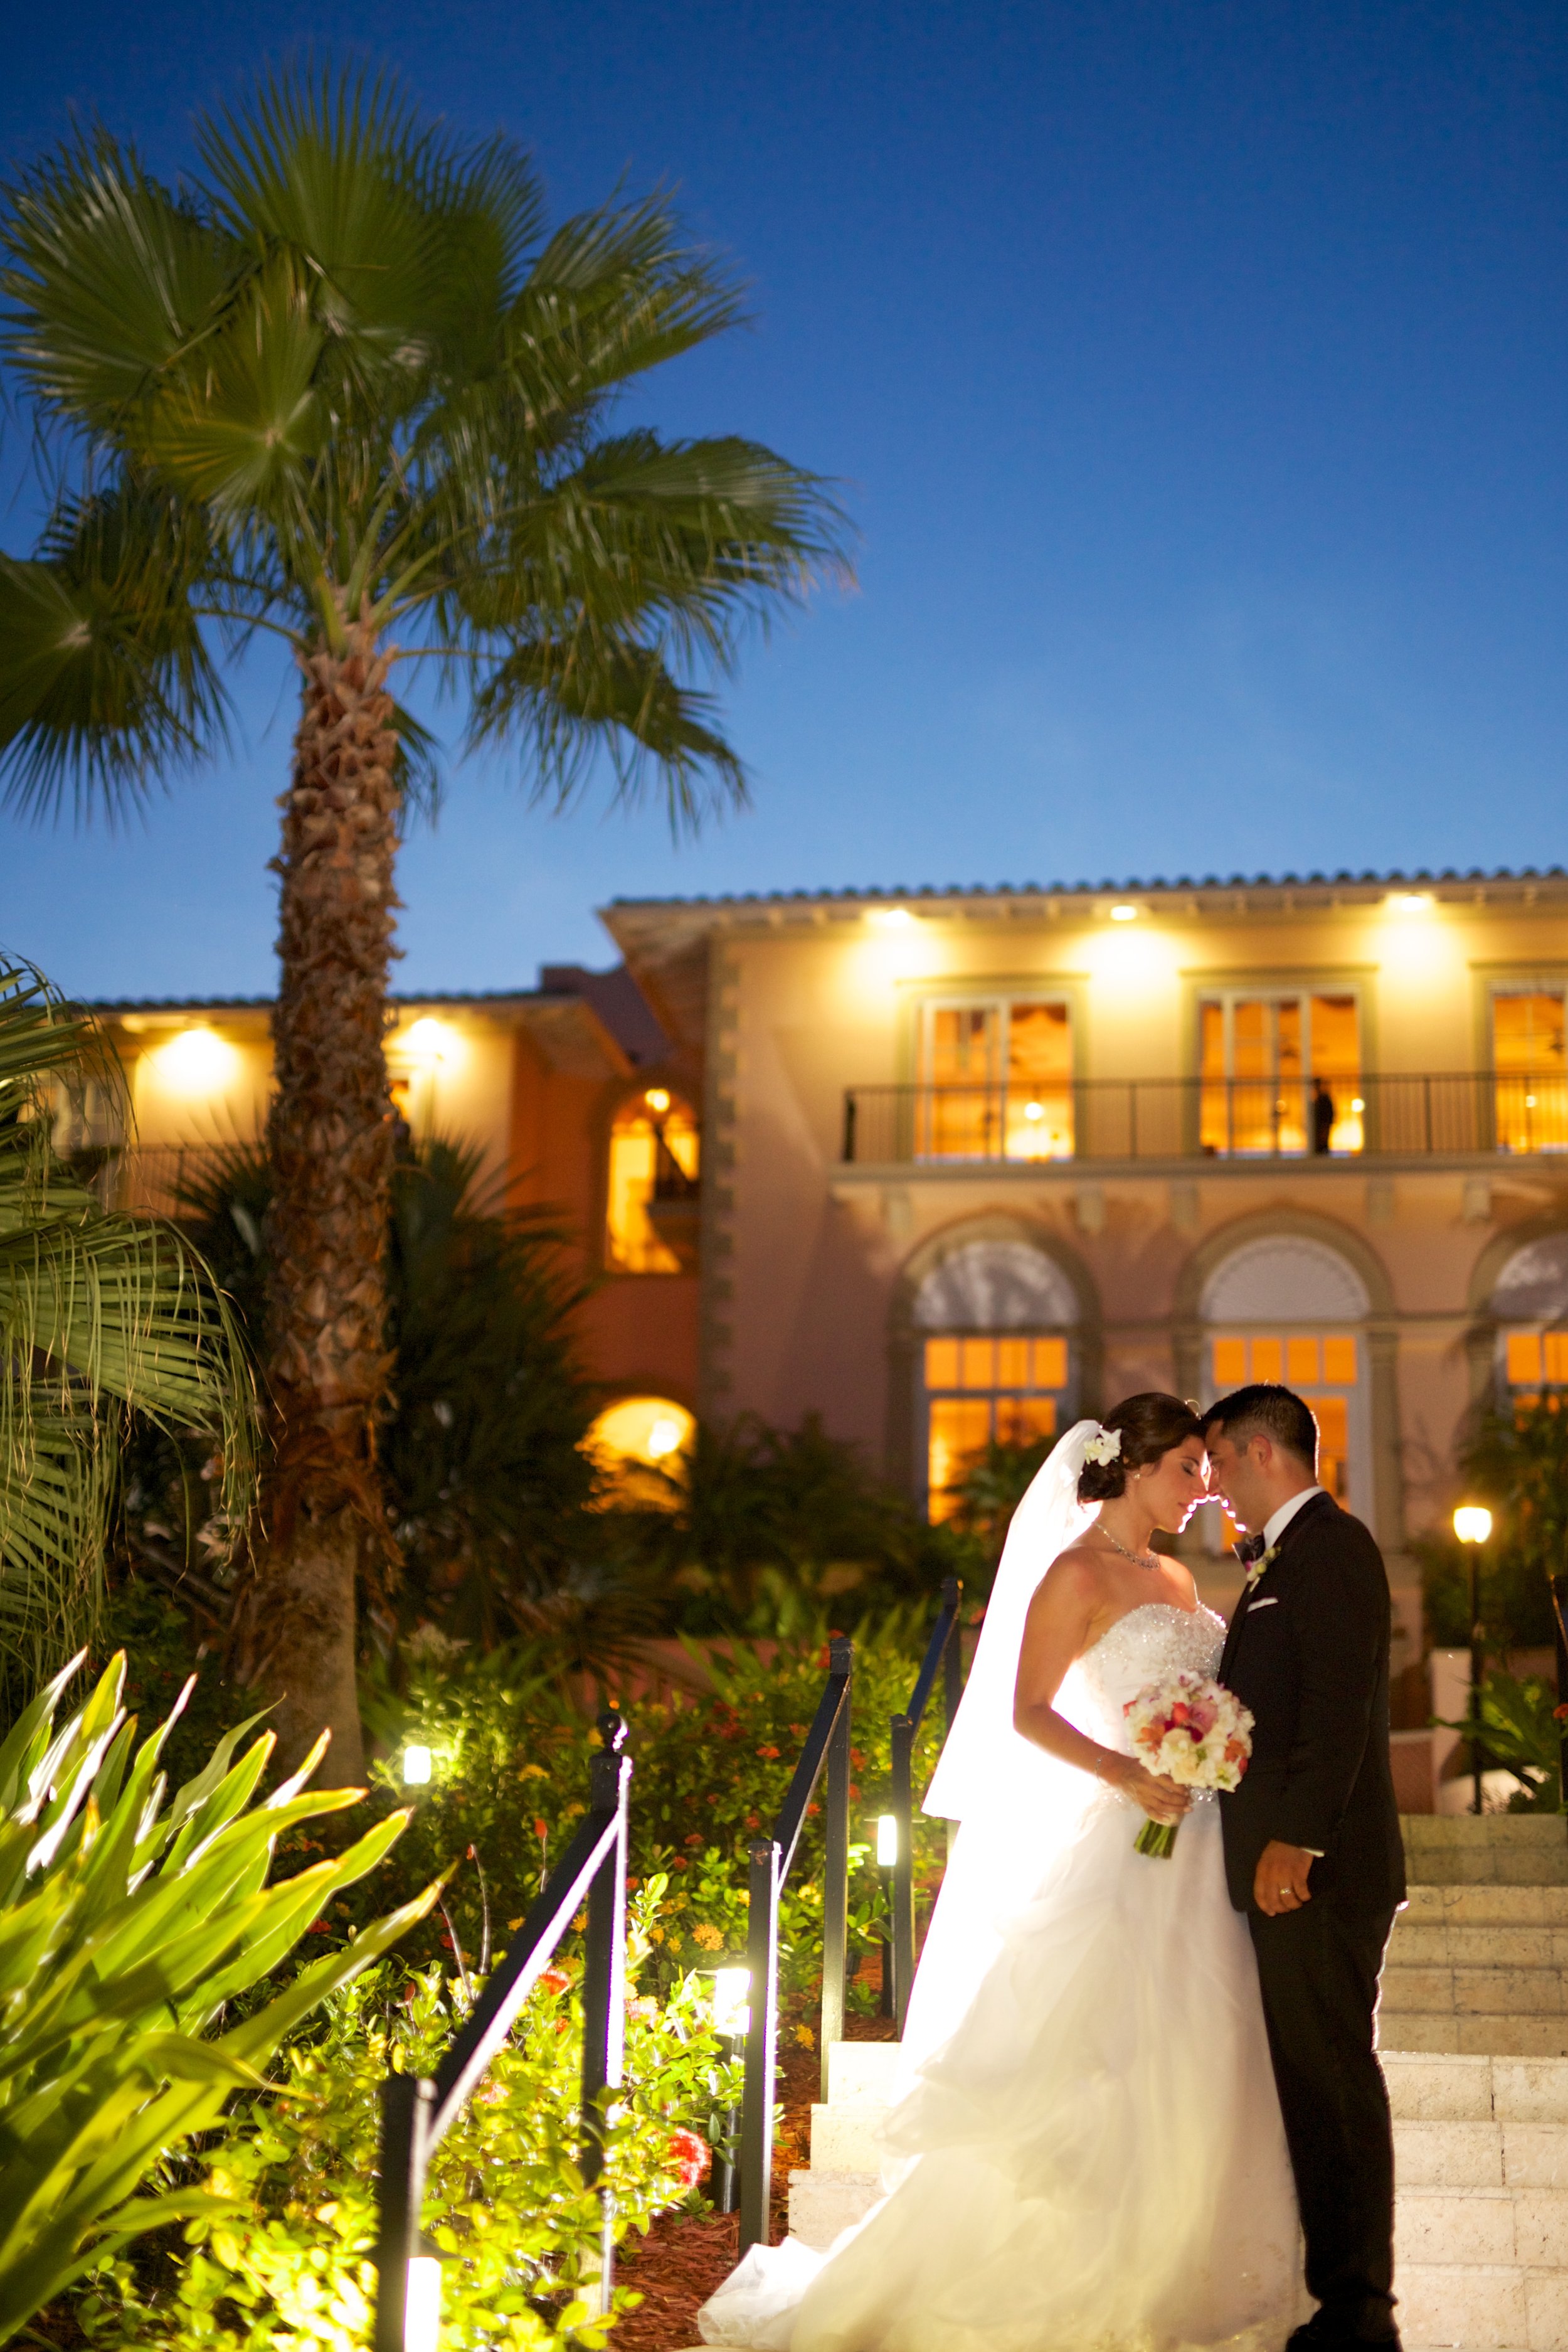 Le Cape Weddings - The Ritz Carlton Saint Thomas VA Wedding - Hesam and Mahsa  Day 3  2847.jpg